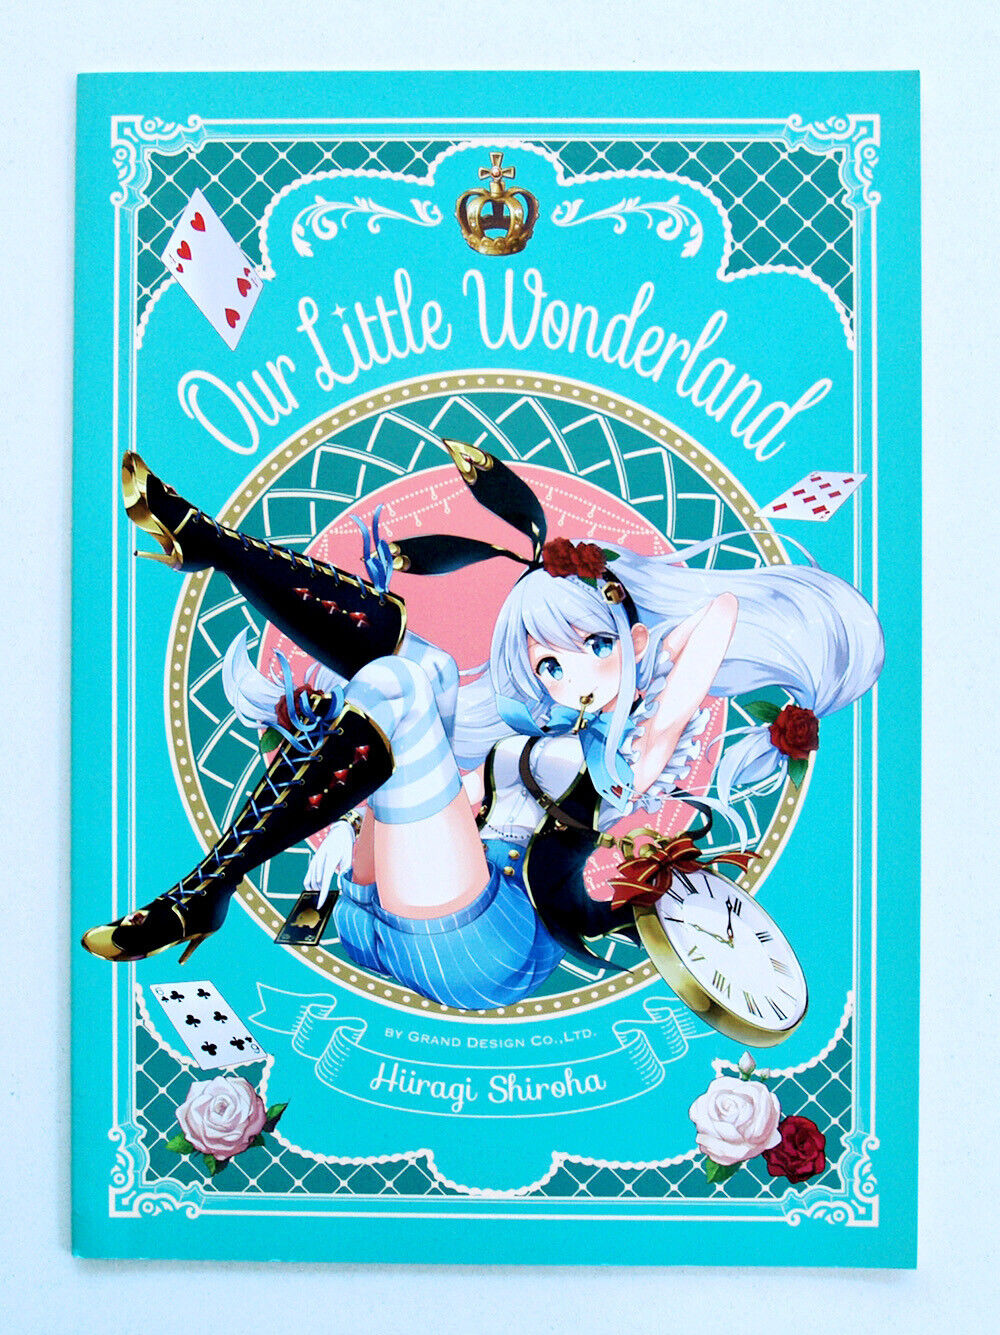 Doujinshi Our Little Wonderland Shiroha Hiiragi Art Book Japan Manga 03031